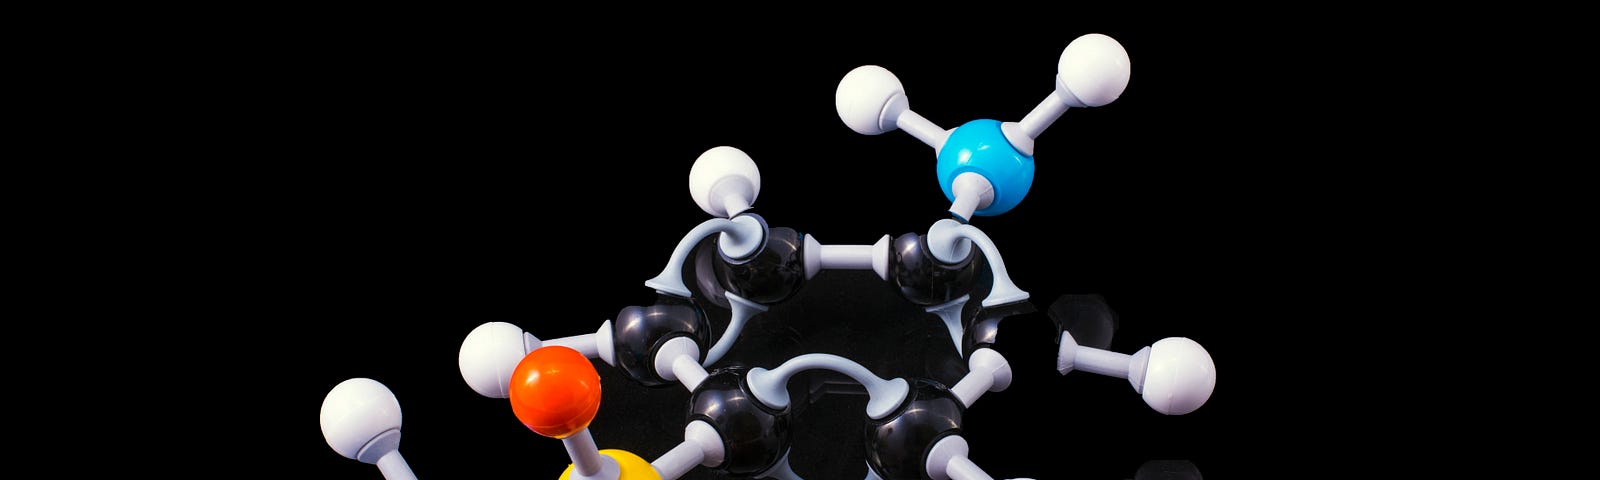 pic of molecule